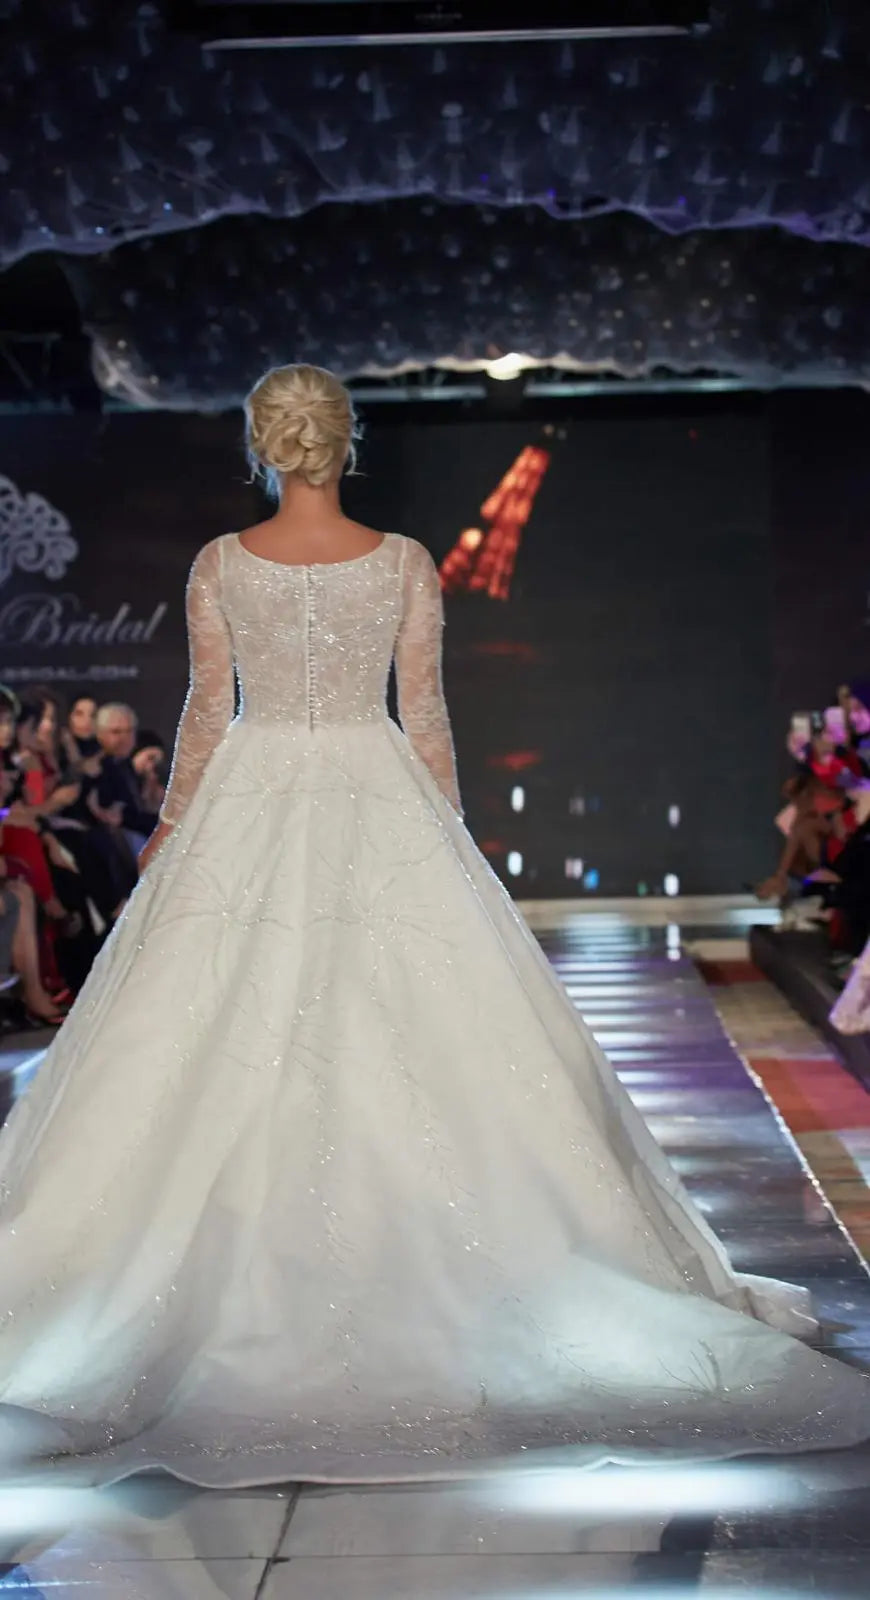 Snowflake sparkling wedding dress aishafashionworld